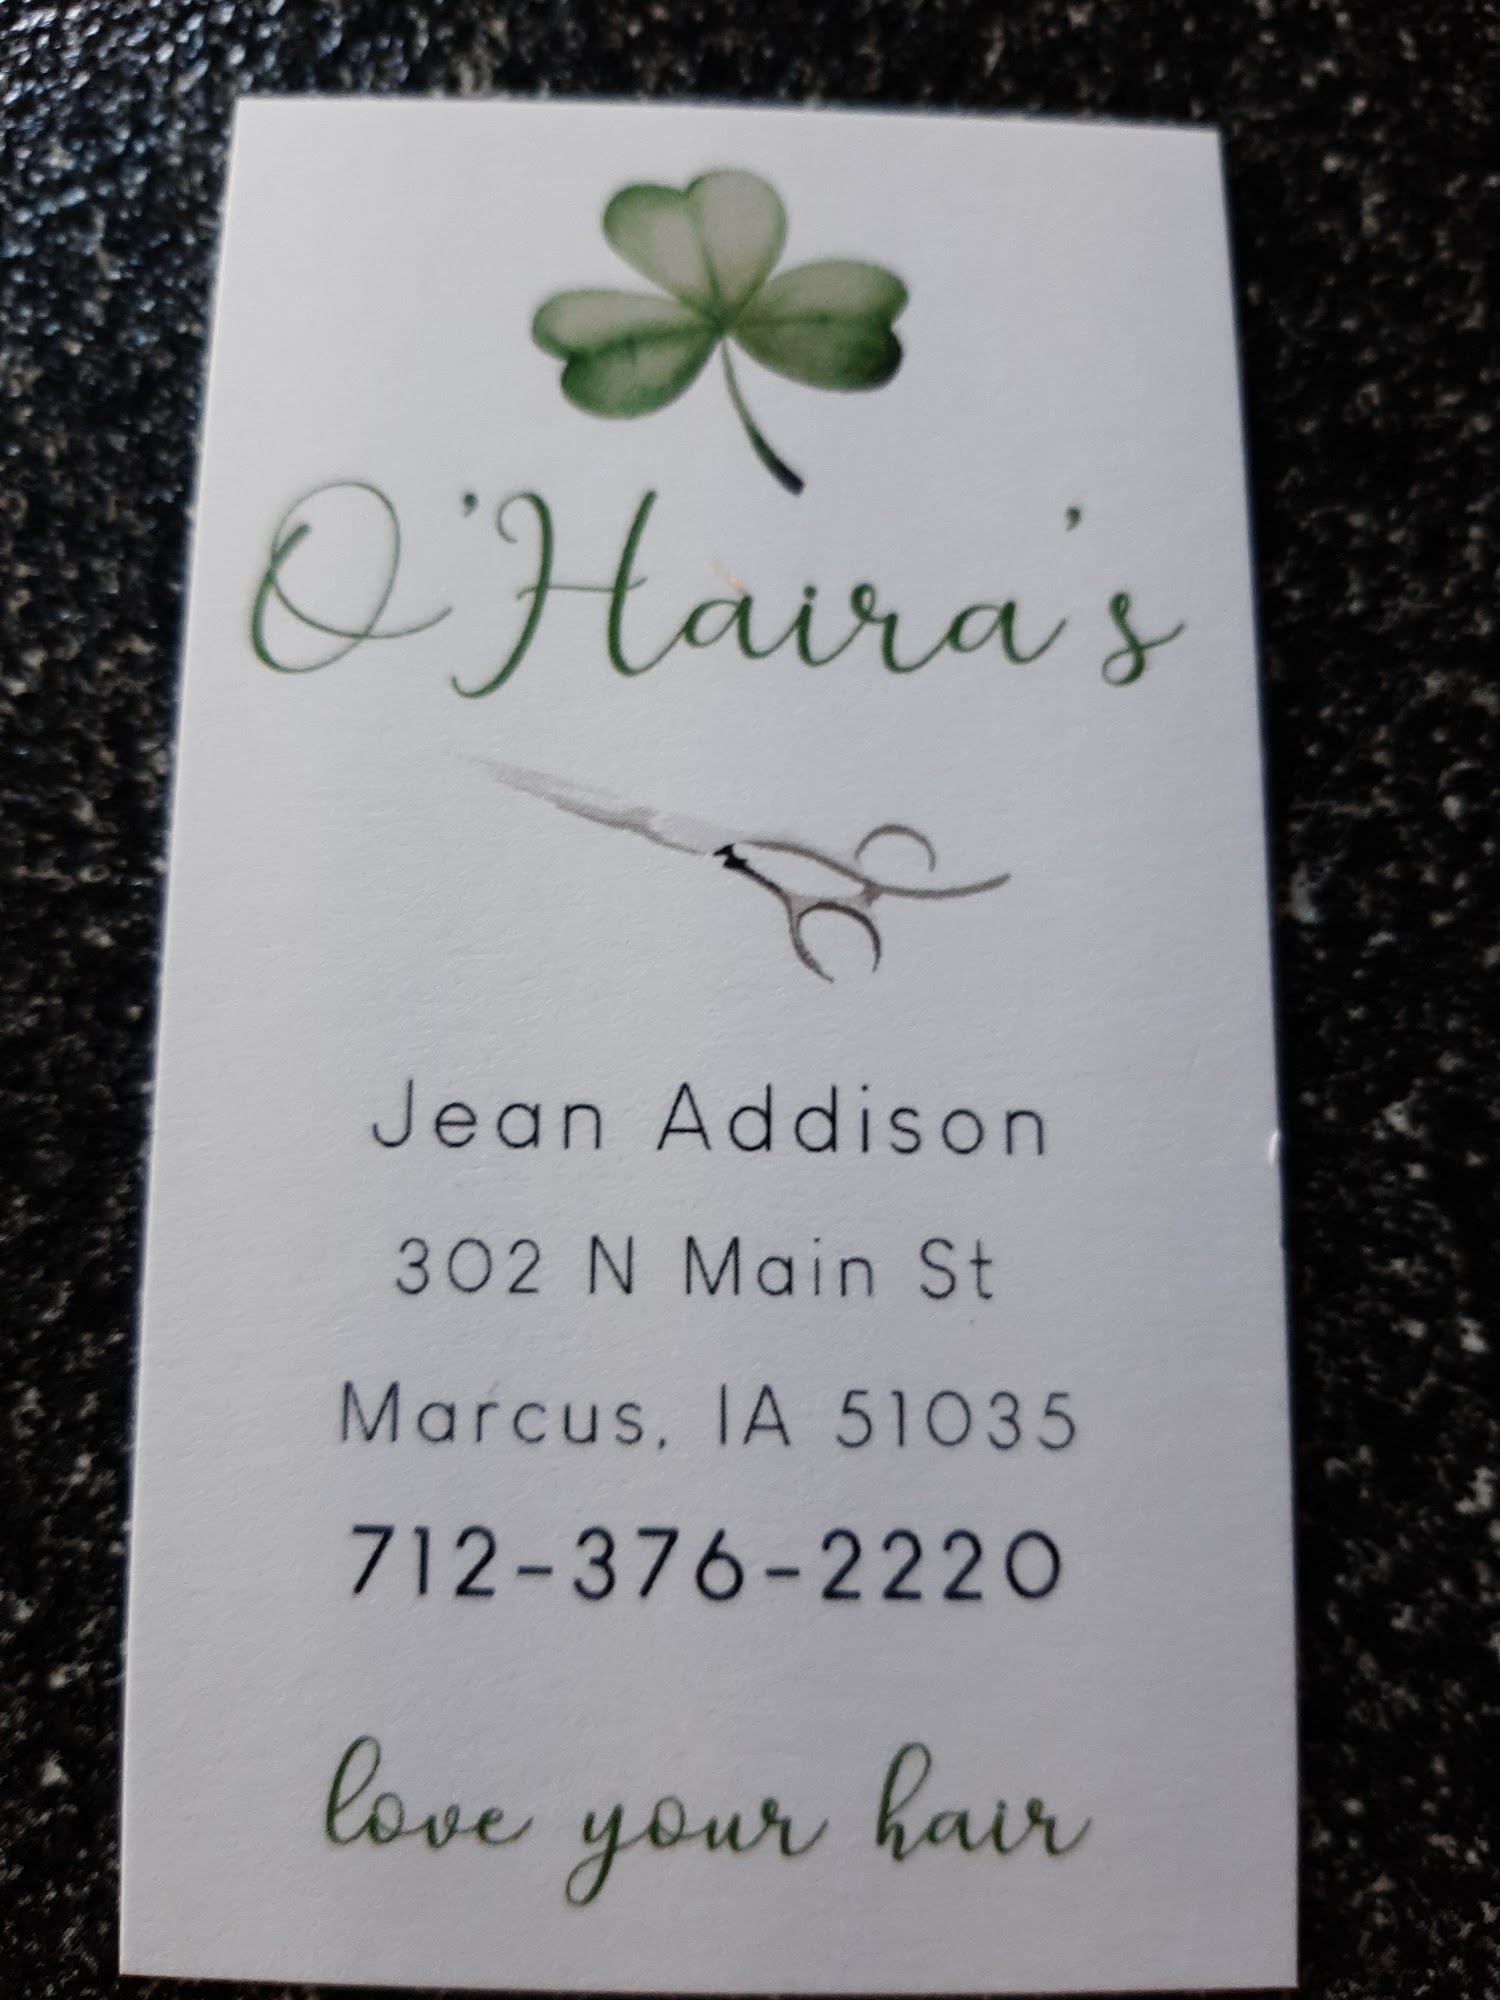 O'Haira's 302 N Main St BOX 188, Marcus Iowa 51035